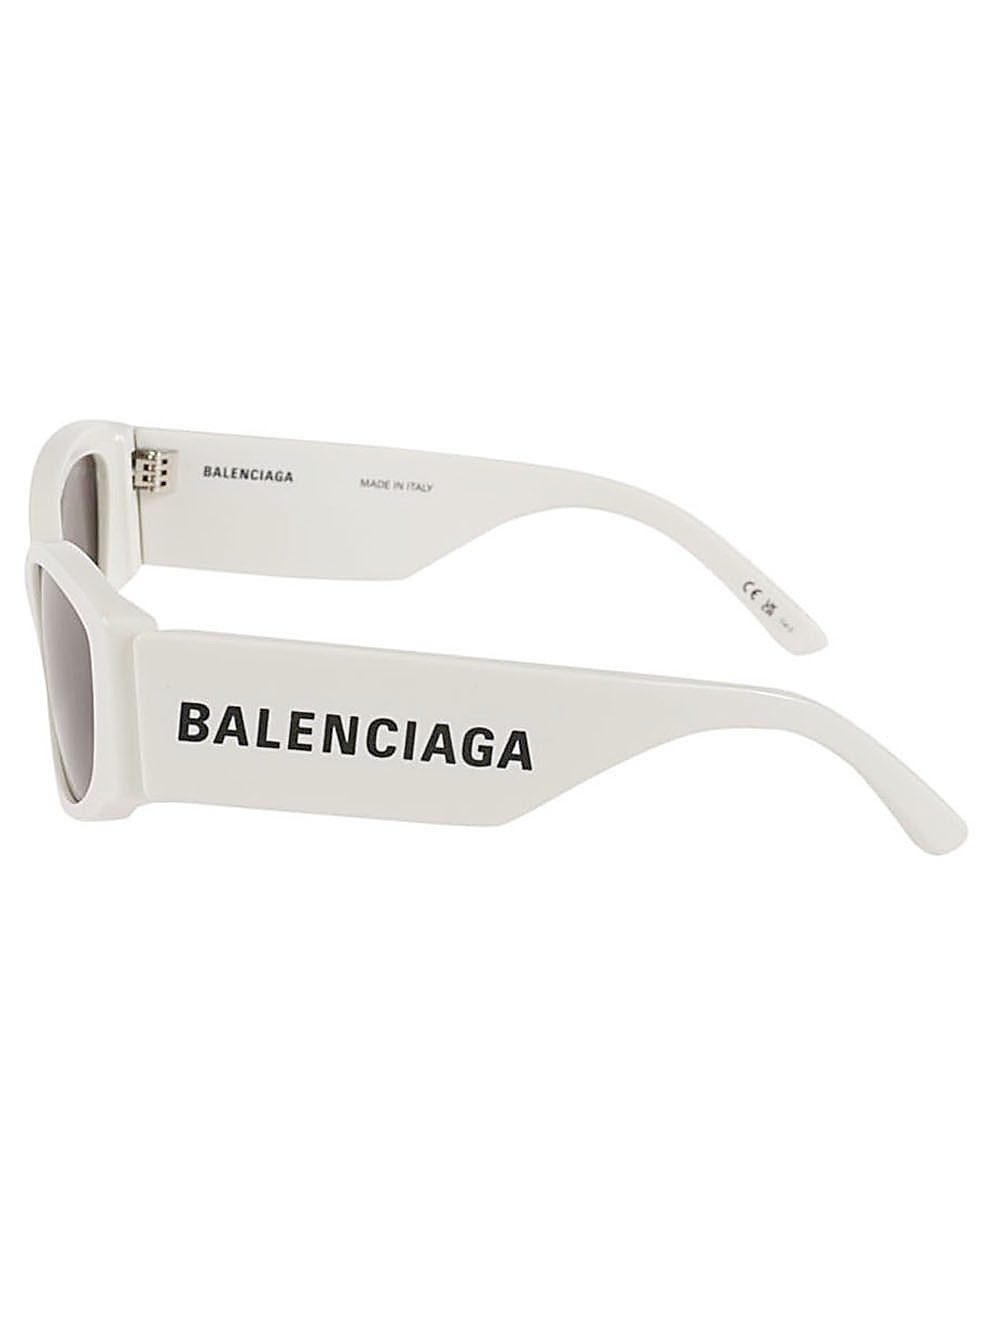 BALENCIAGA - Sunglasses